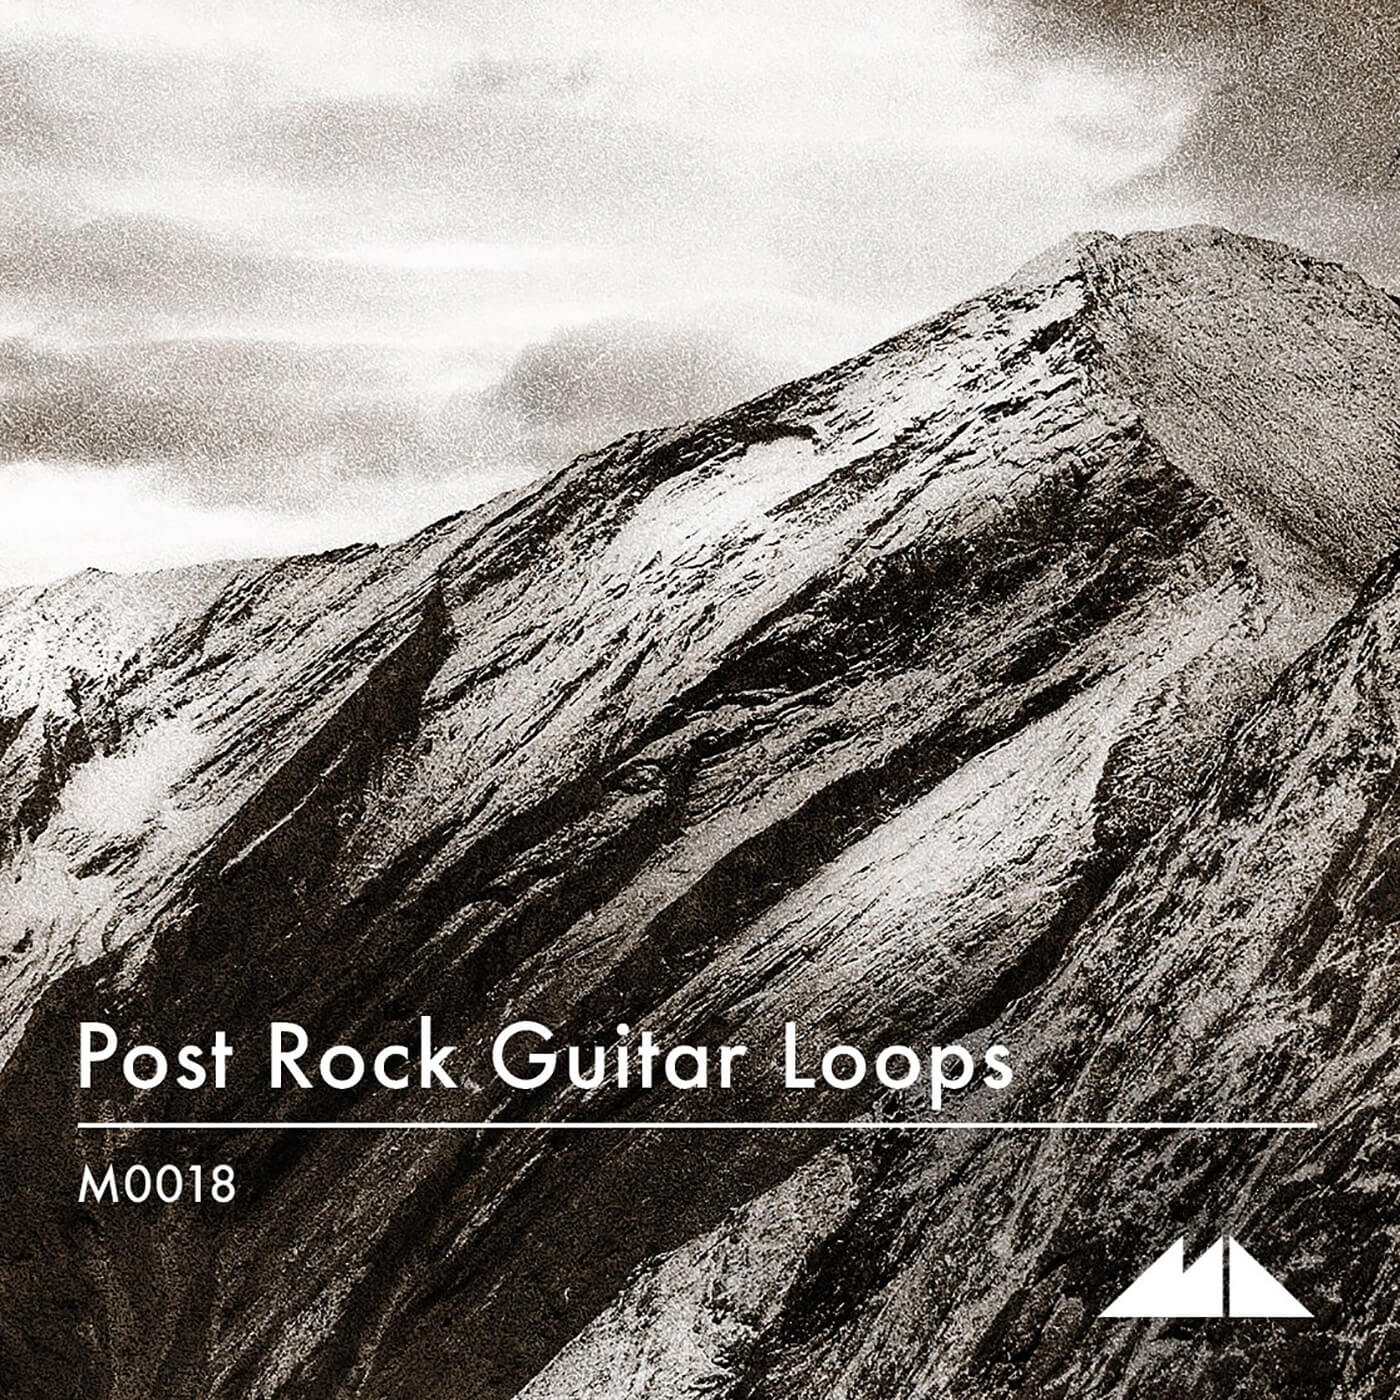 ModeAudio - Post Rock Guitar Loops